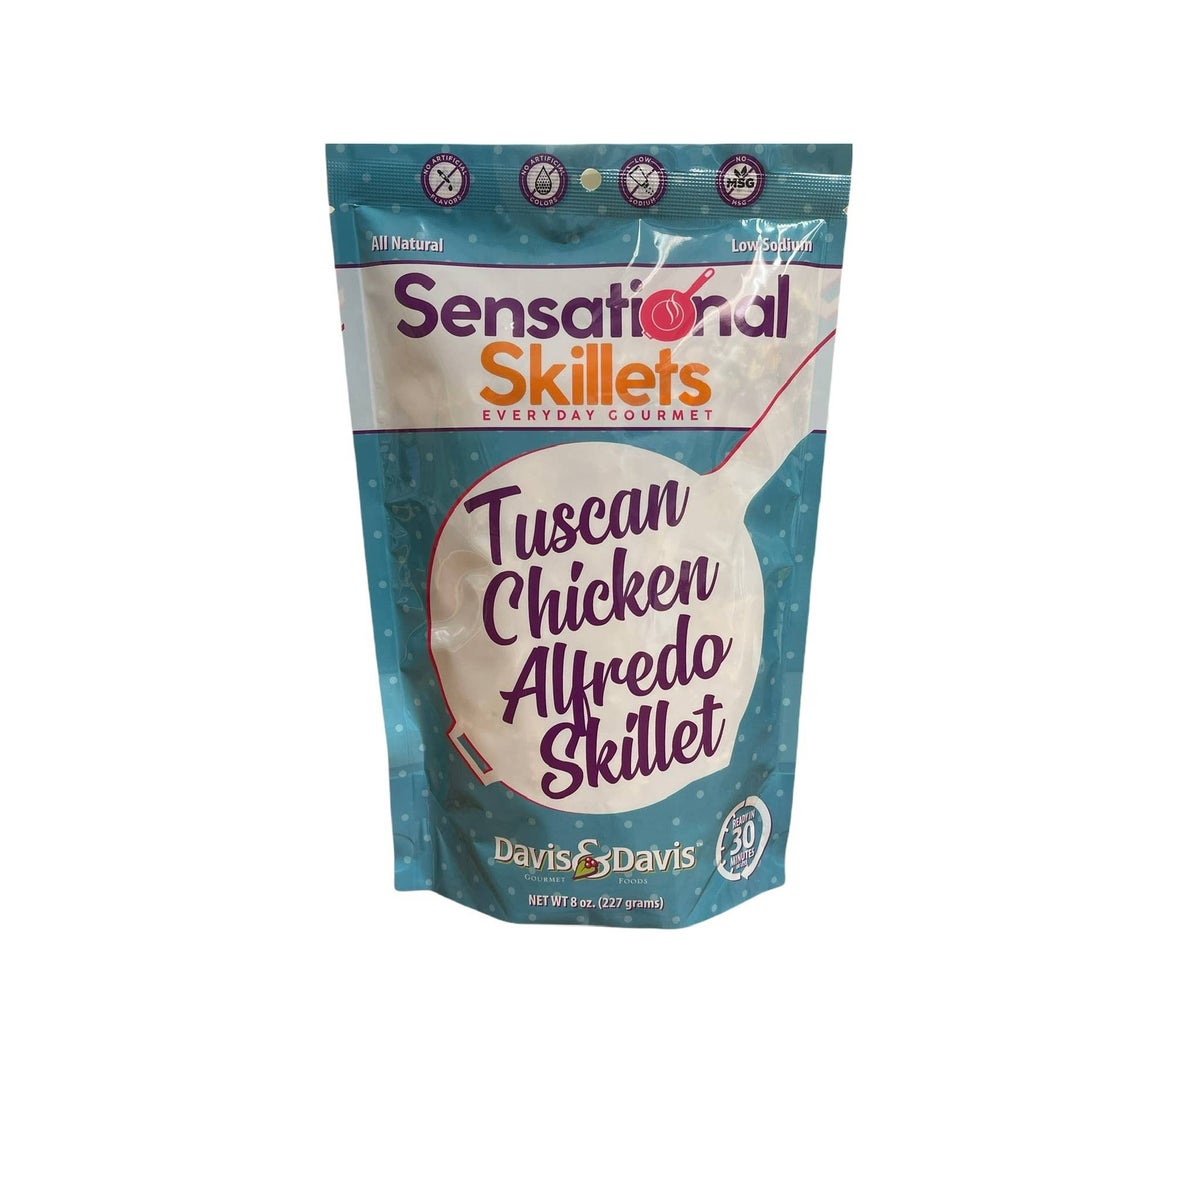 Sensational Skillets - Tuscan Chicken Alfredo